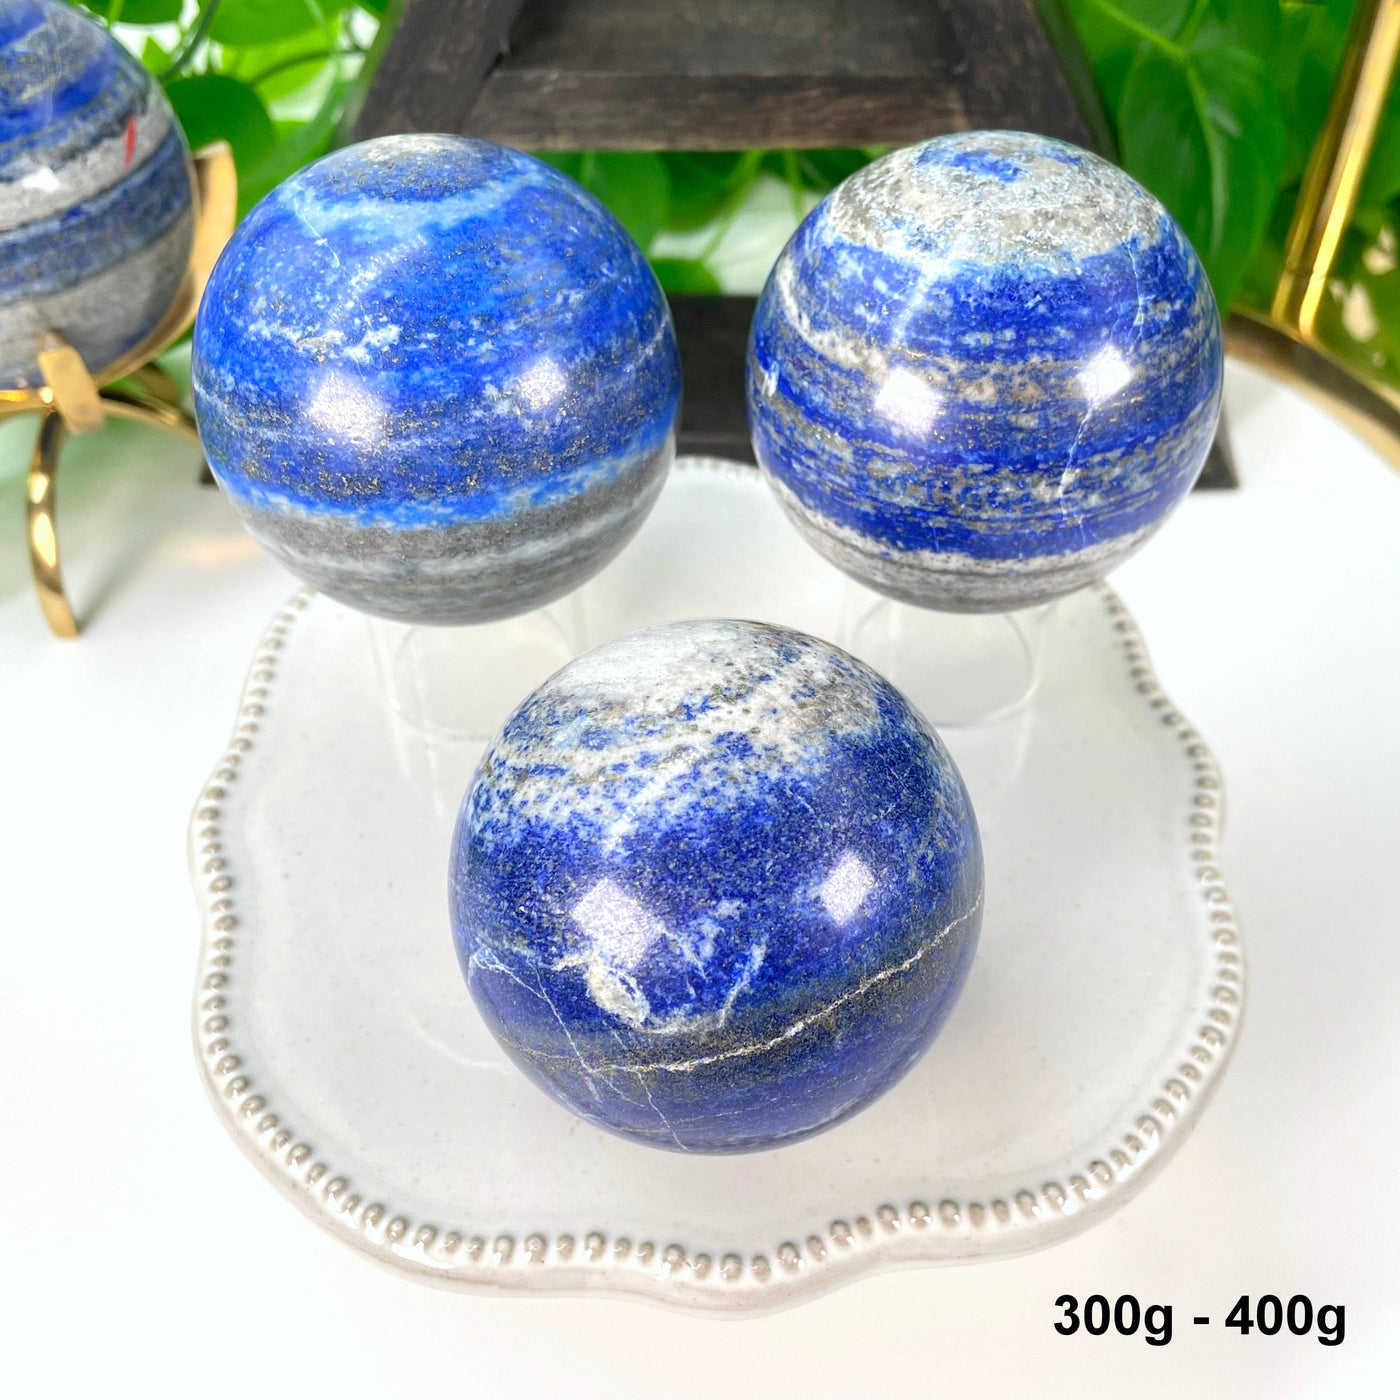 three 300g - 400g lapis lazuli polished spheres on display 